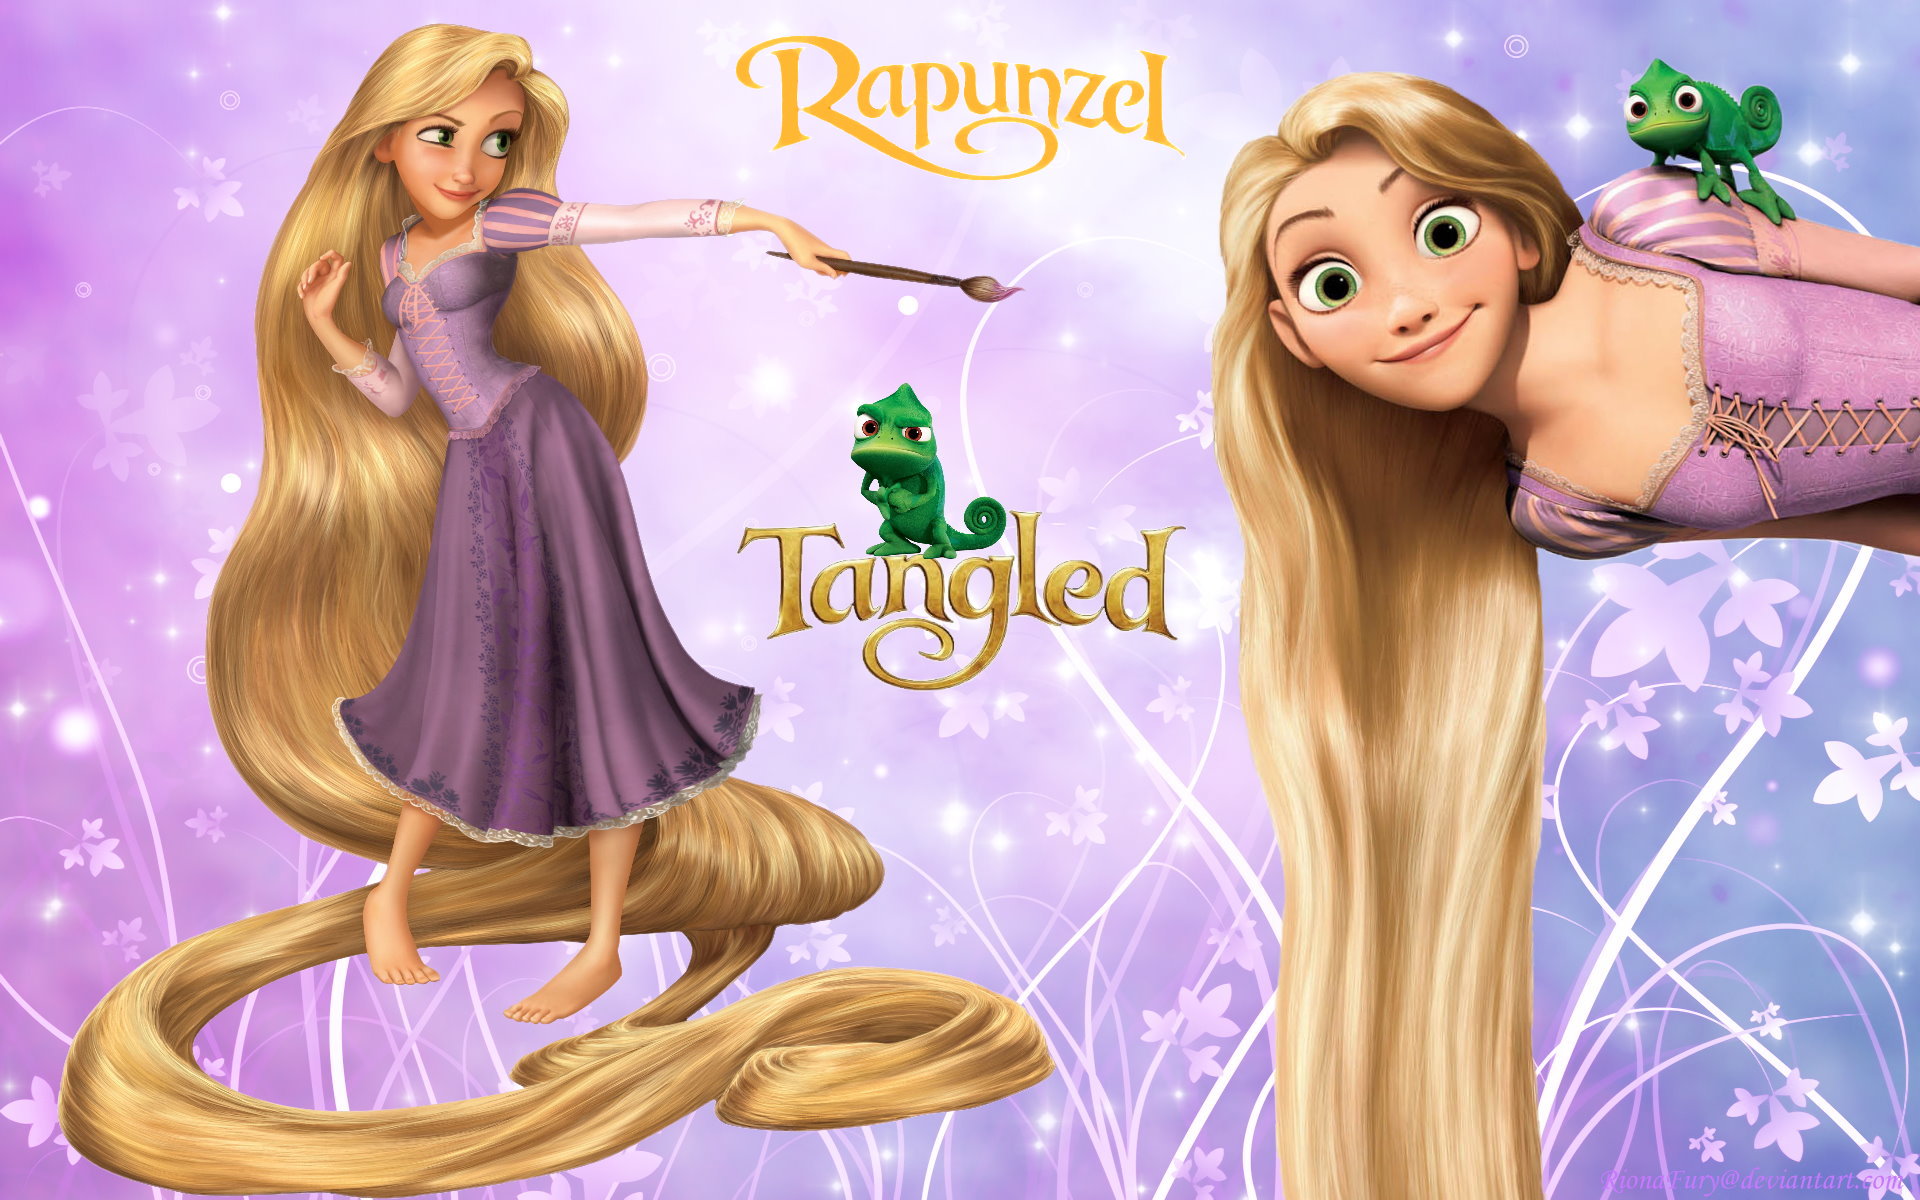 Tangled images Disney Princess Rapunzel HD wallpaper and background